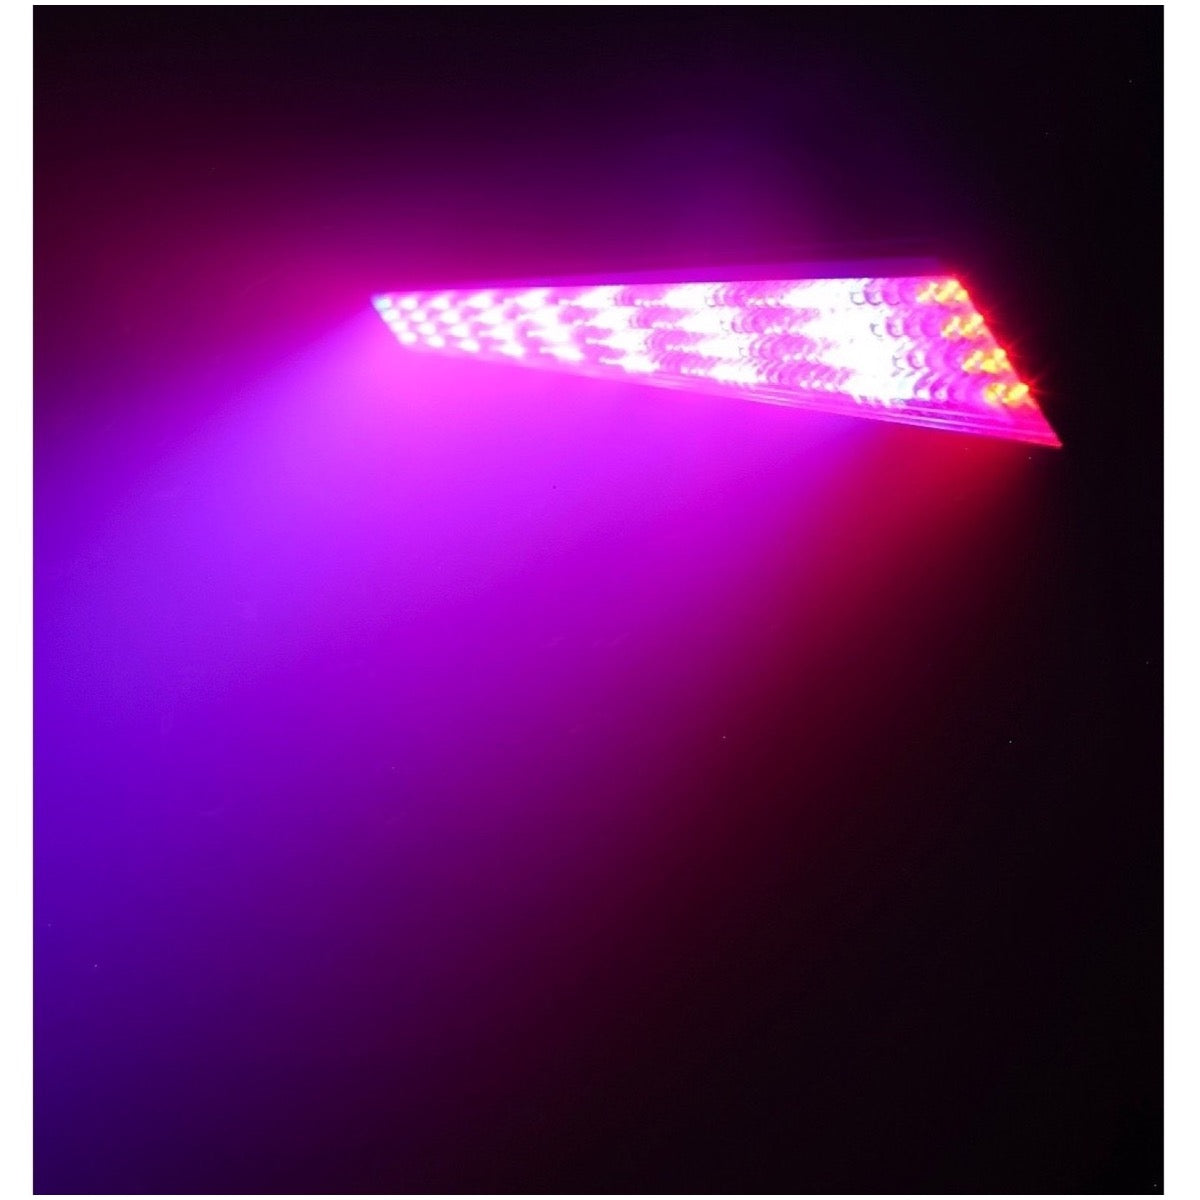 Chauvet DJ COLORstrip LED Wash Light